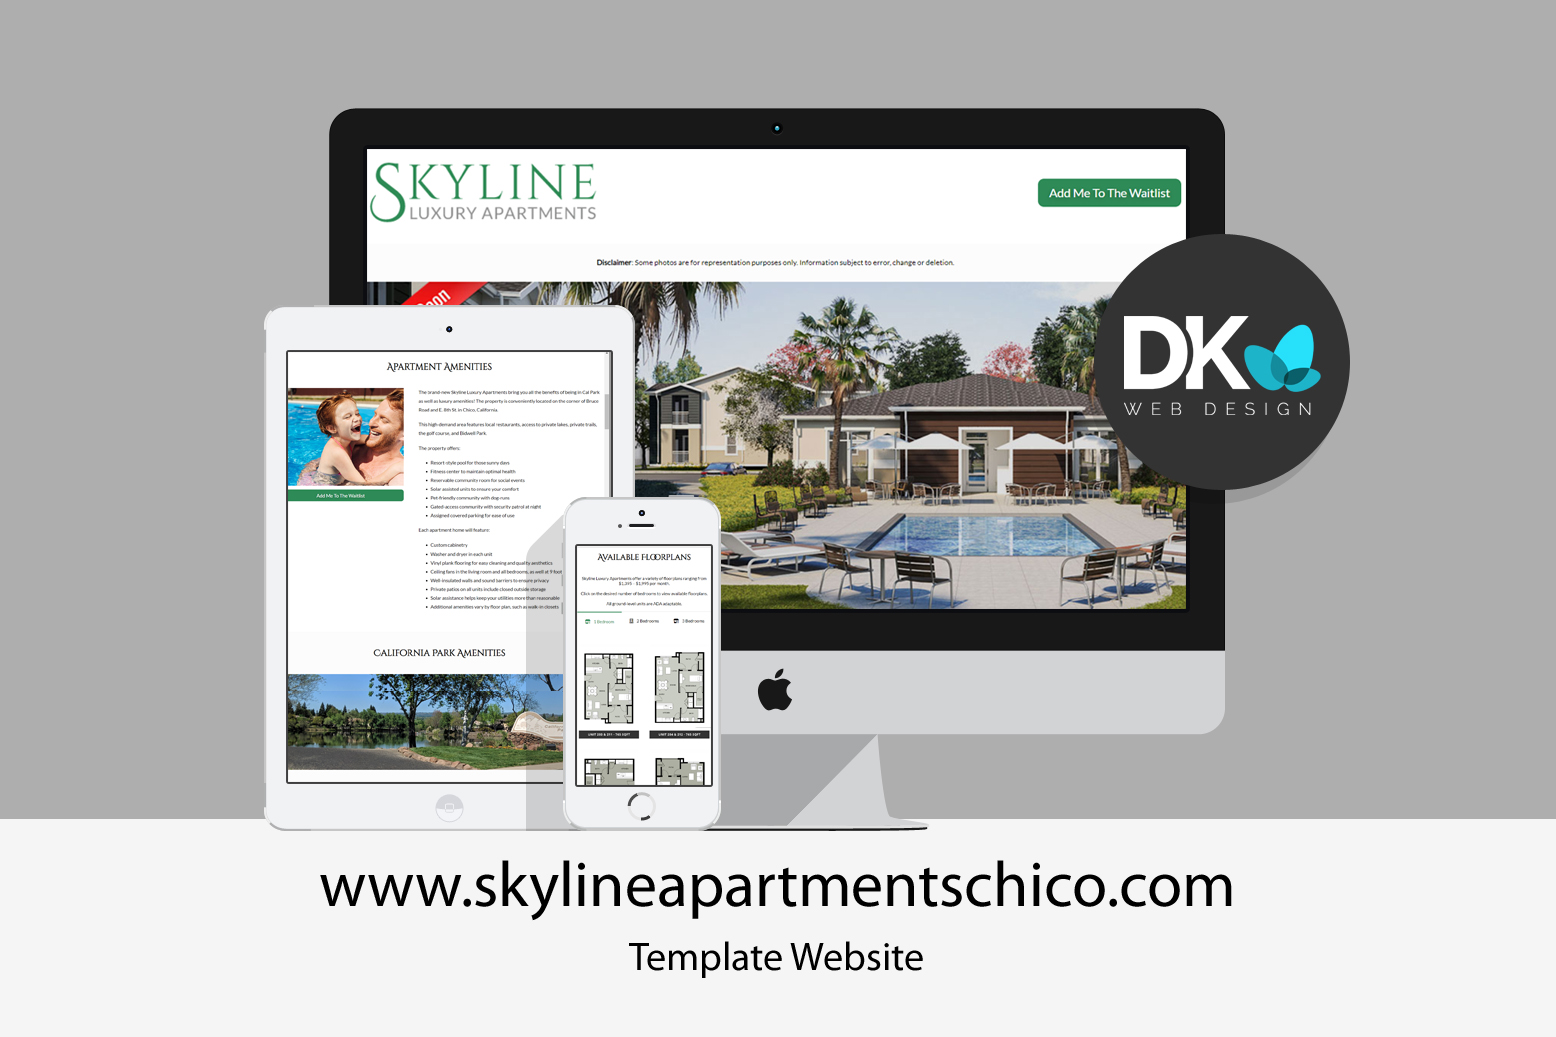 Showcase image for Skyline Apartments website